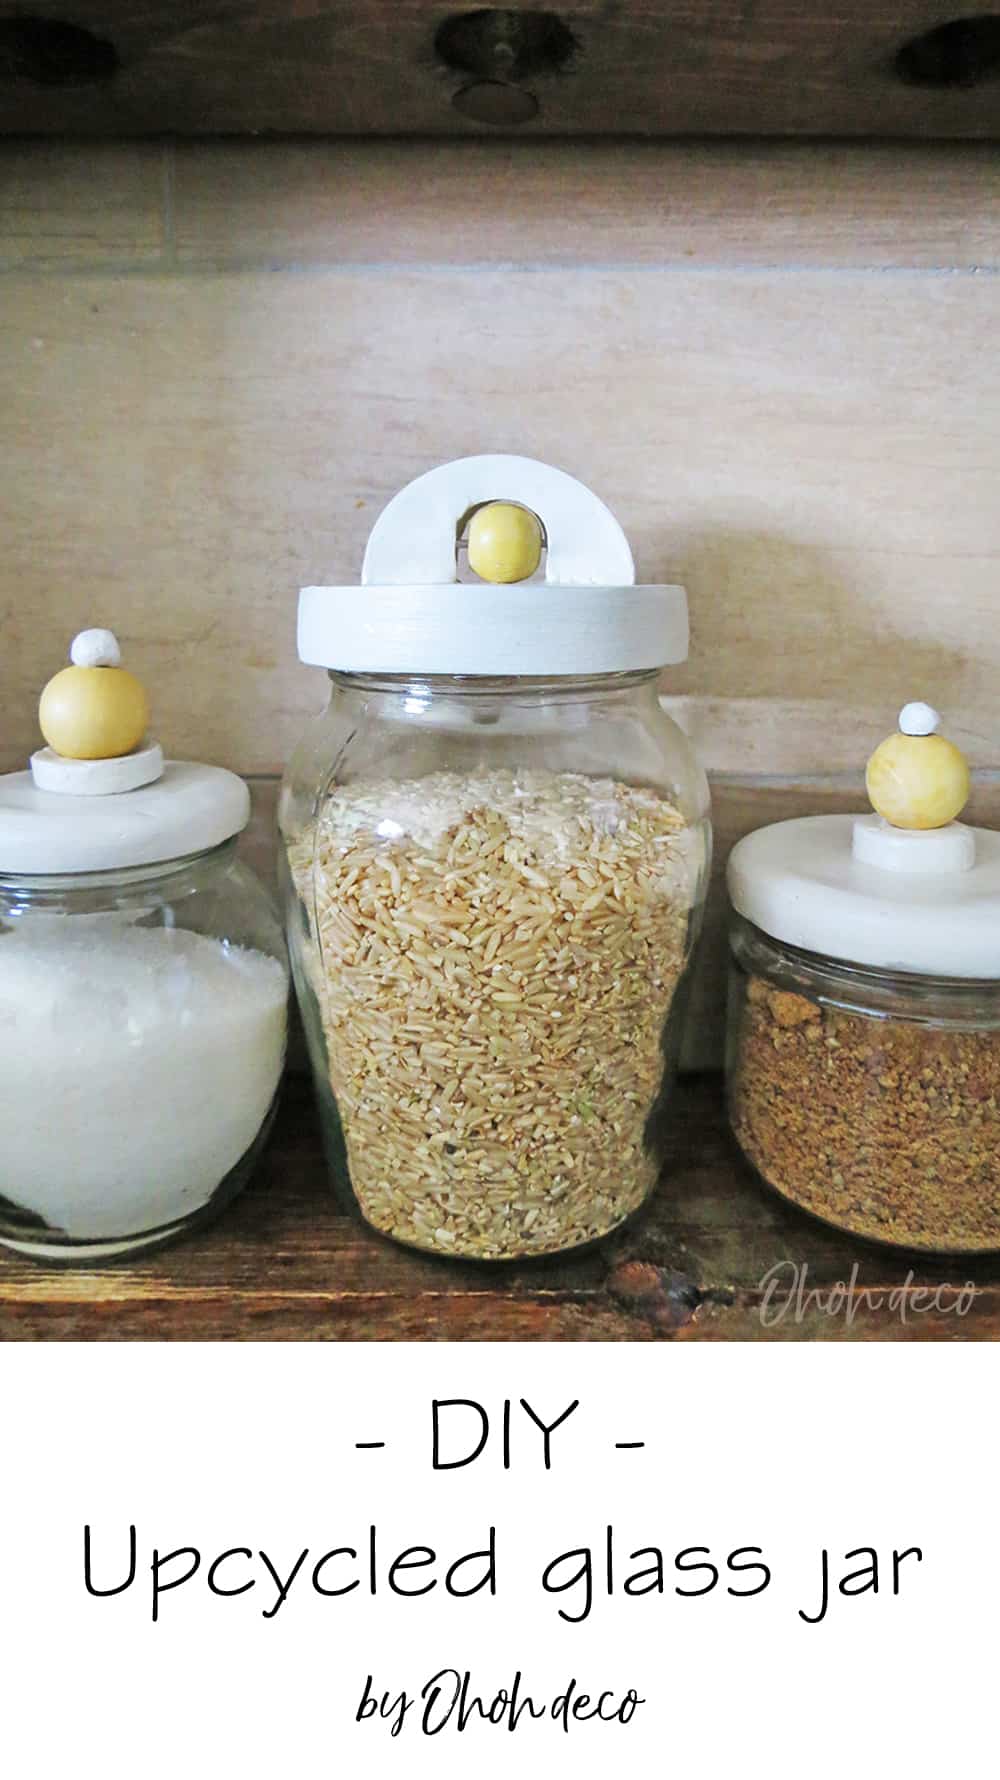 Glass jar storage decorating idea